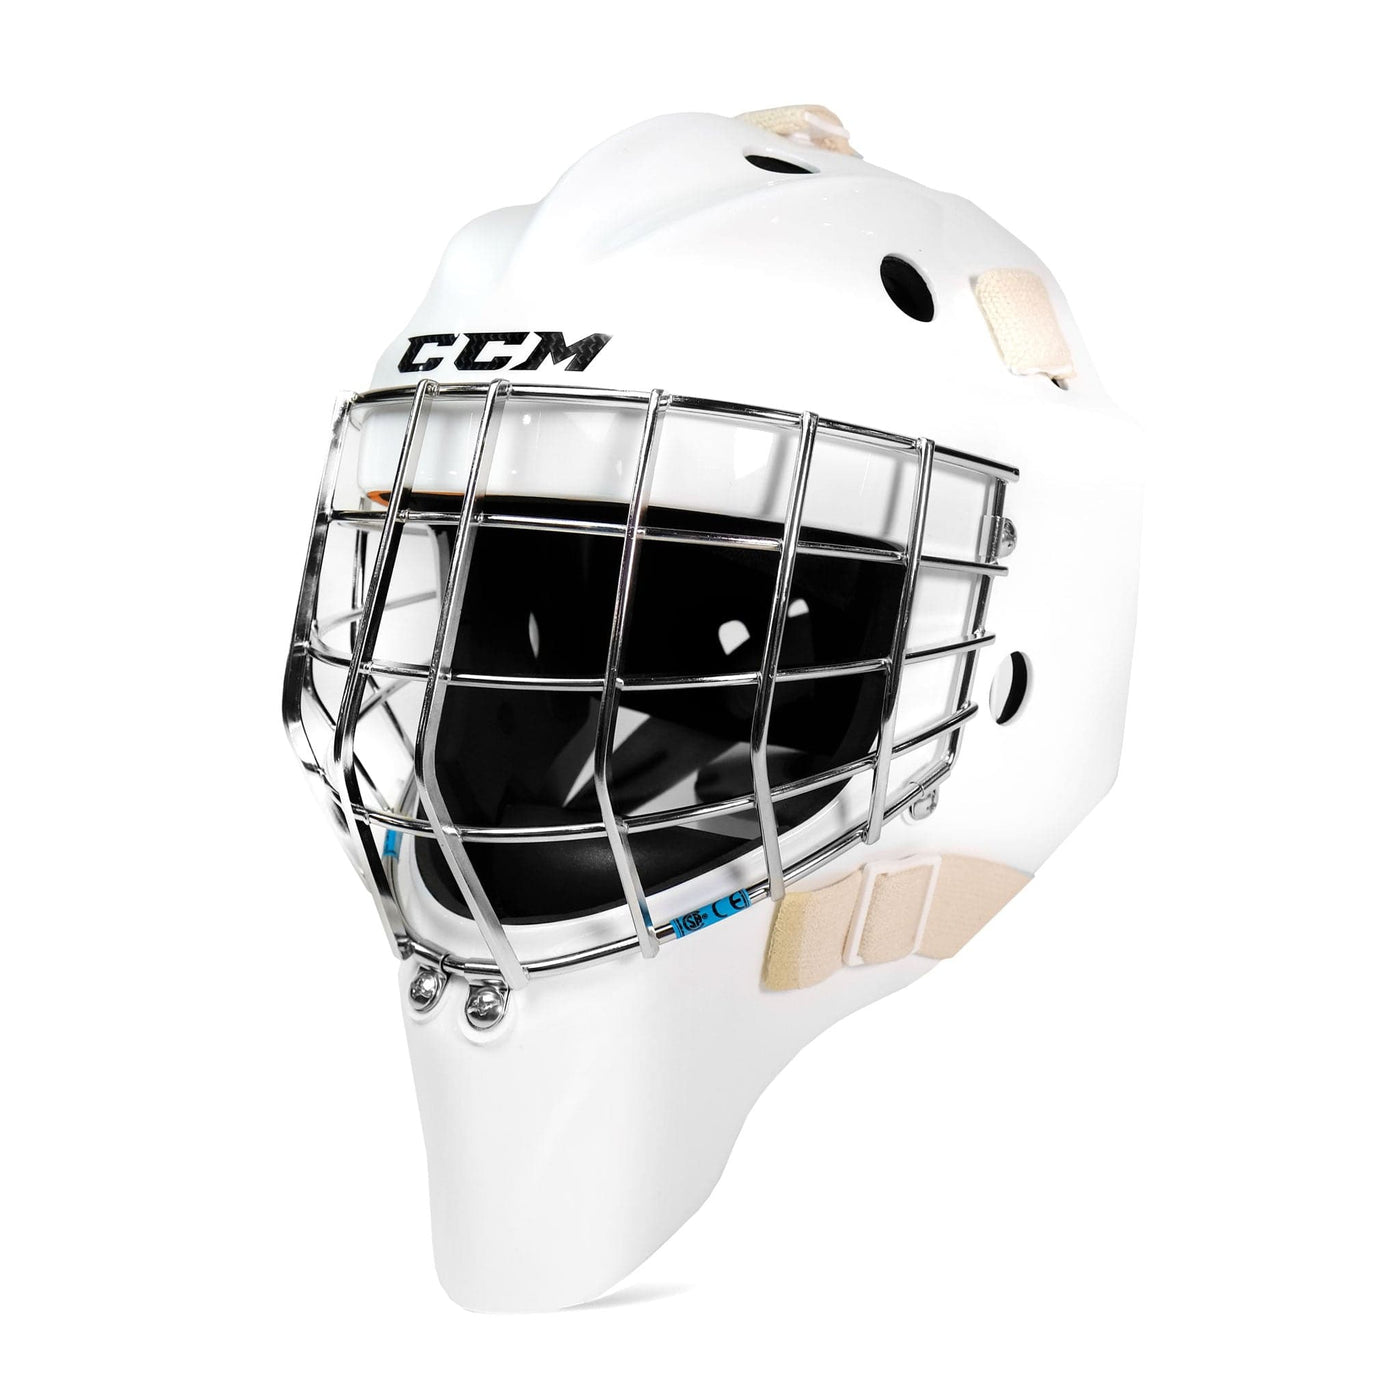 CCM Pro Senior Goalie Mask - Pro Stock - The Hockey Shop Source For Sports